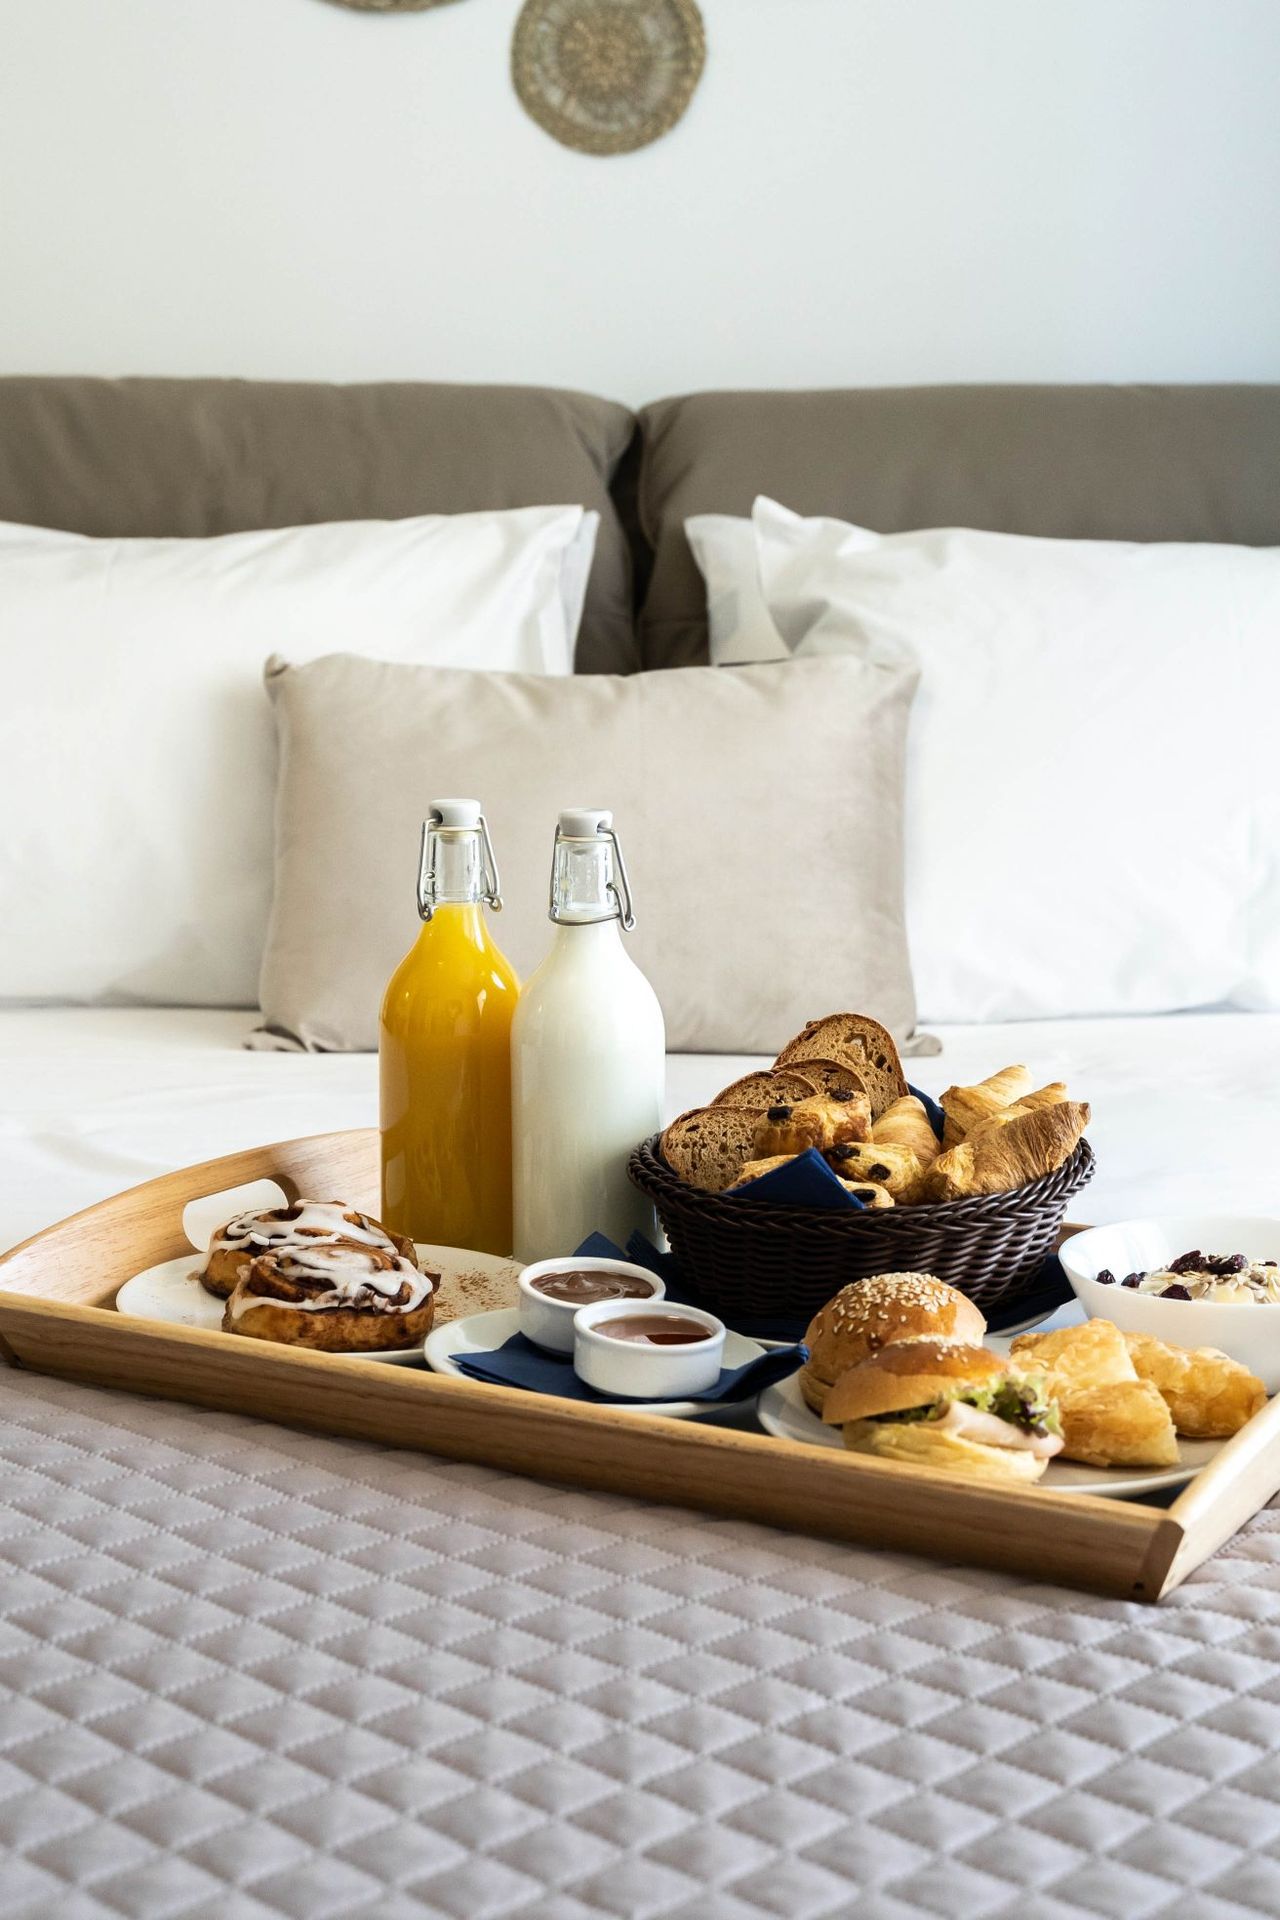 Breakfast in the bed